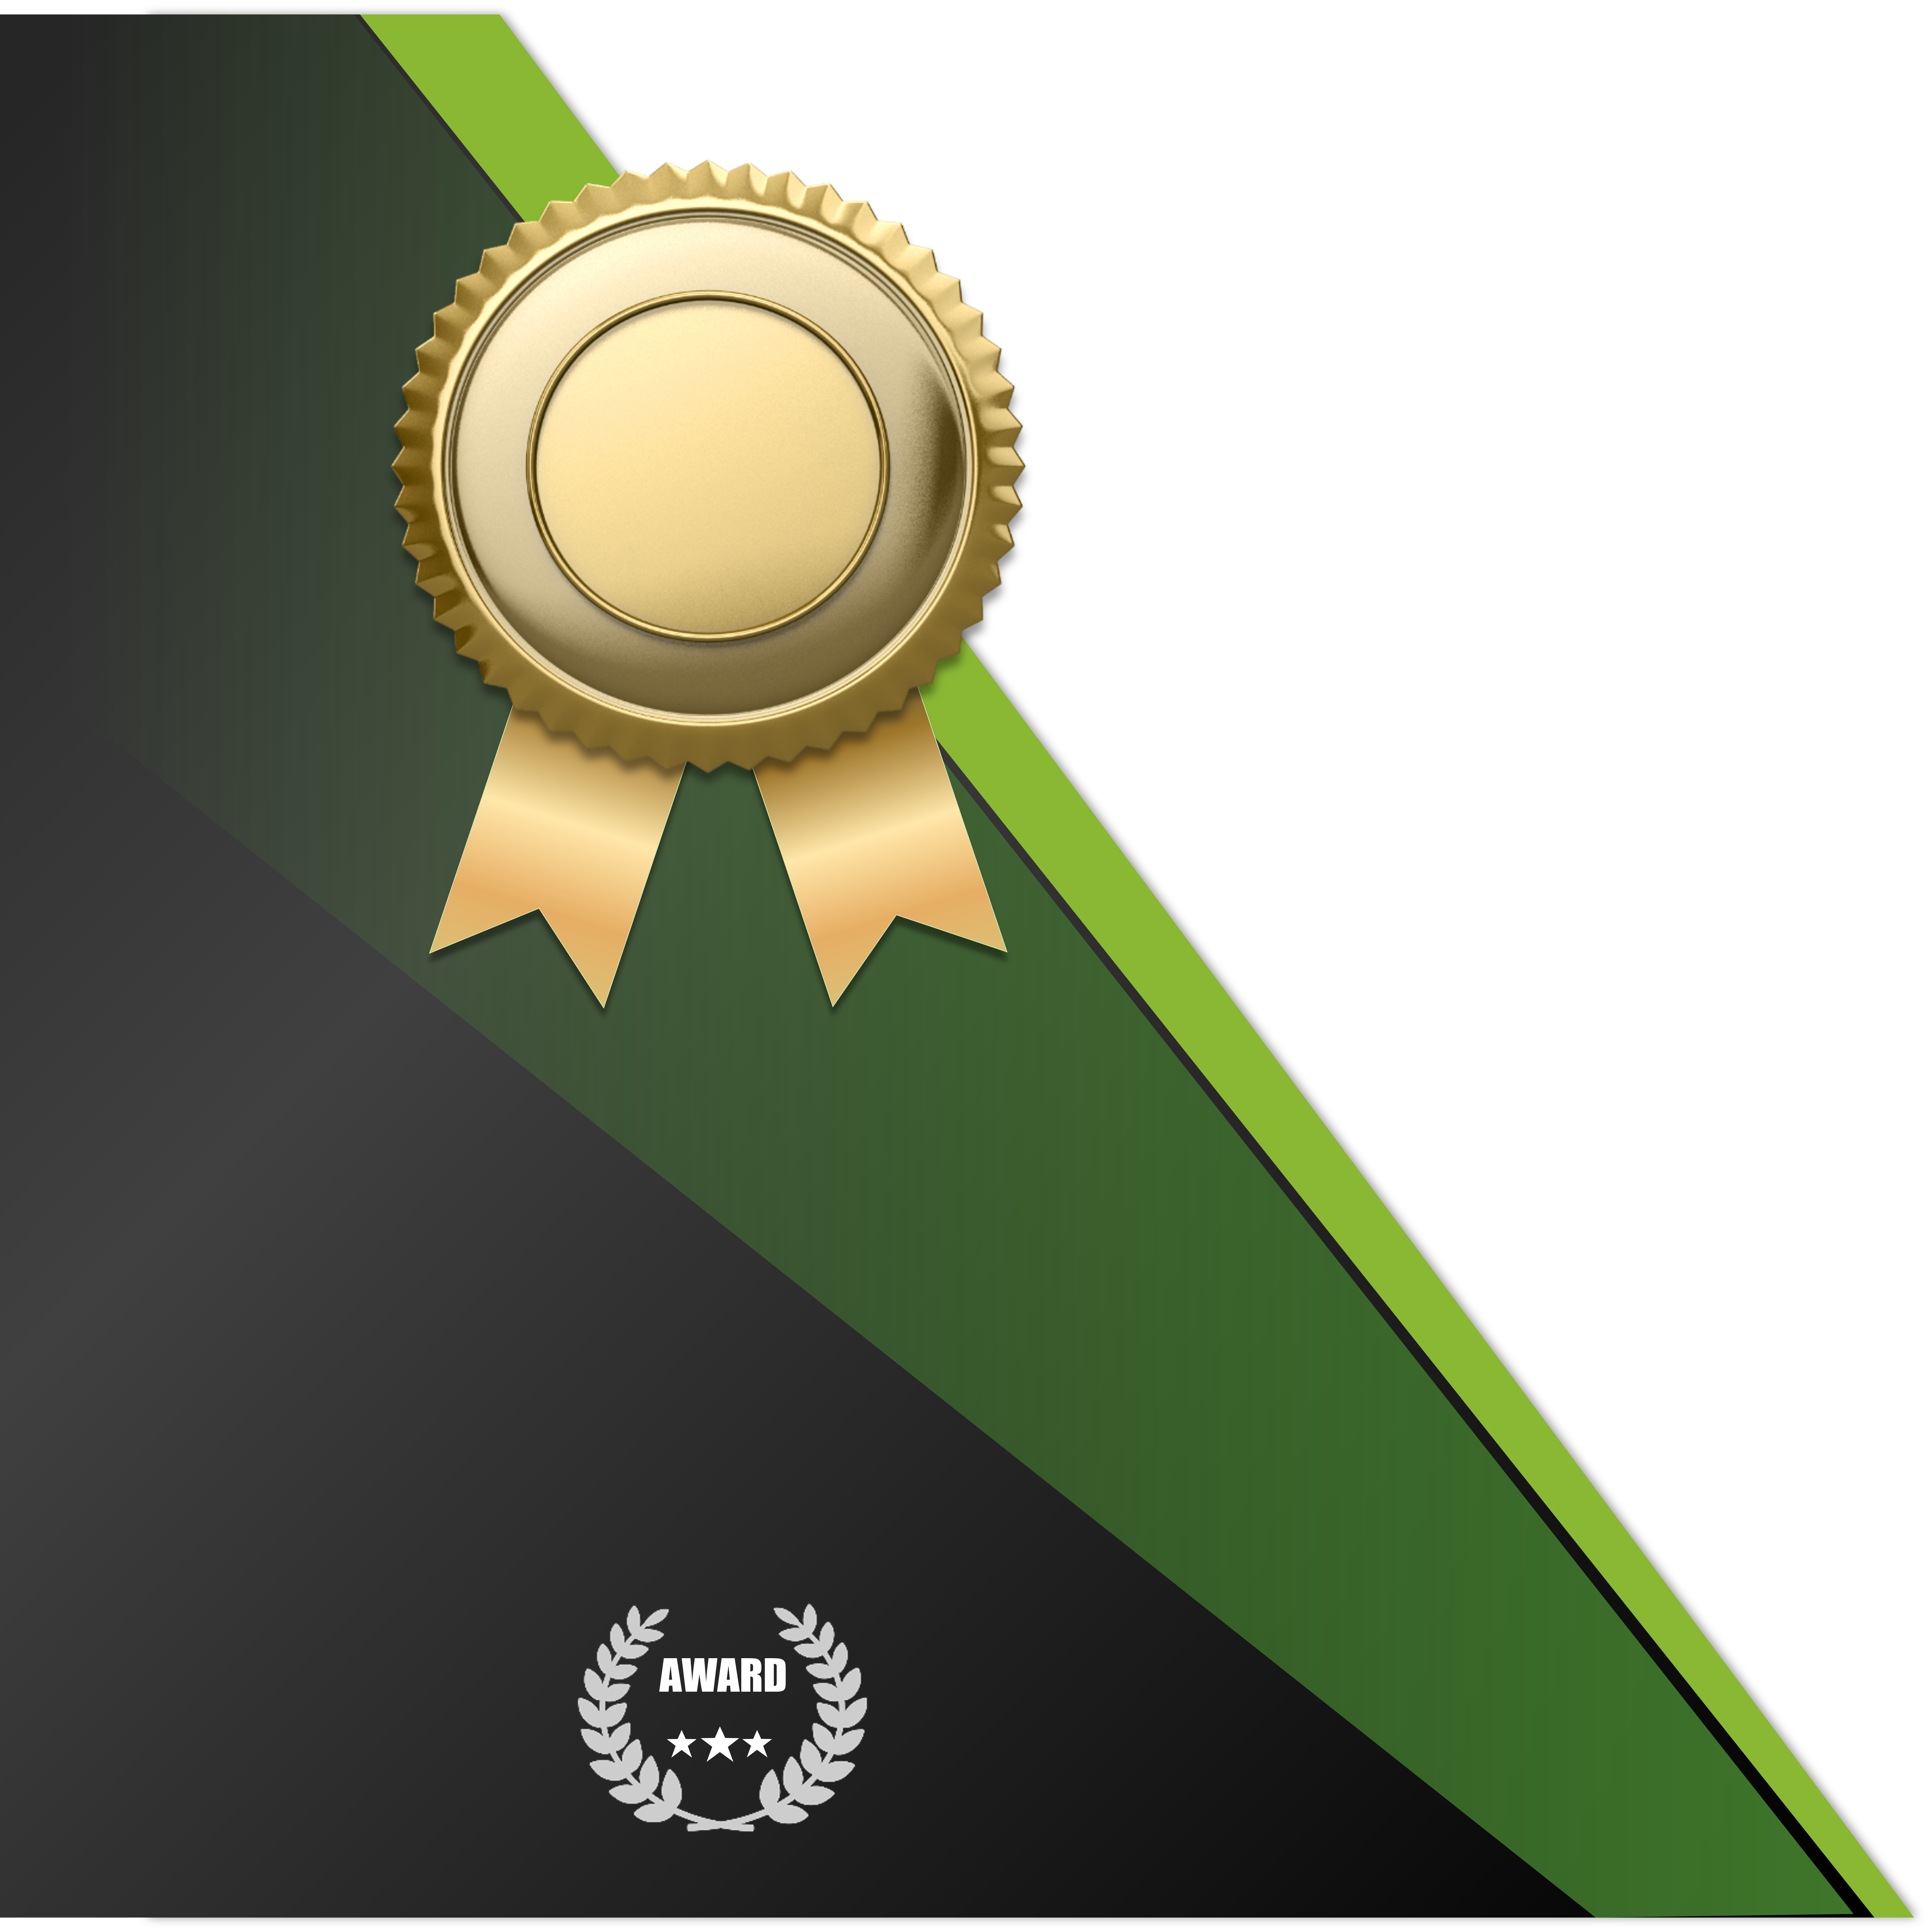 Decorative Green diagoanl lines with award symbol